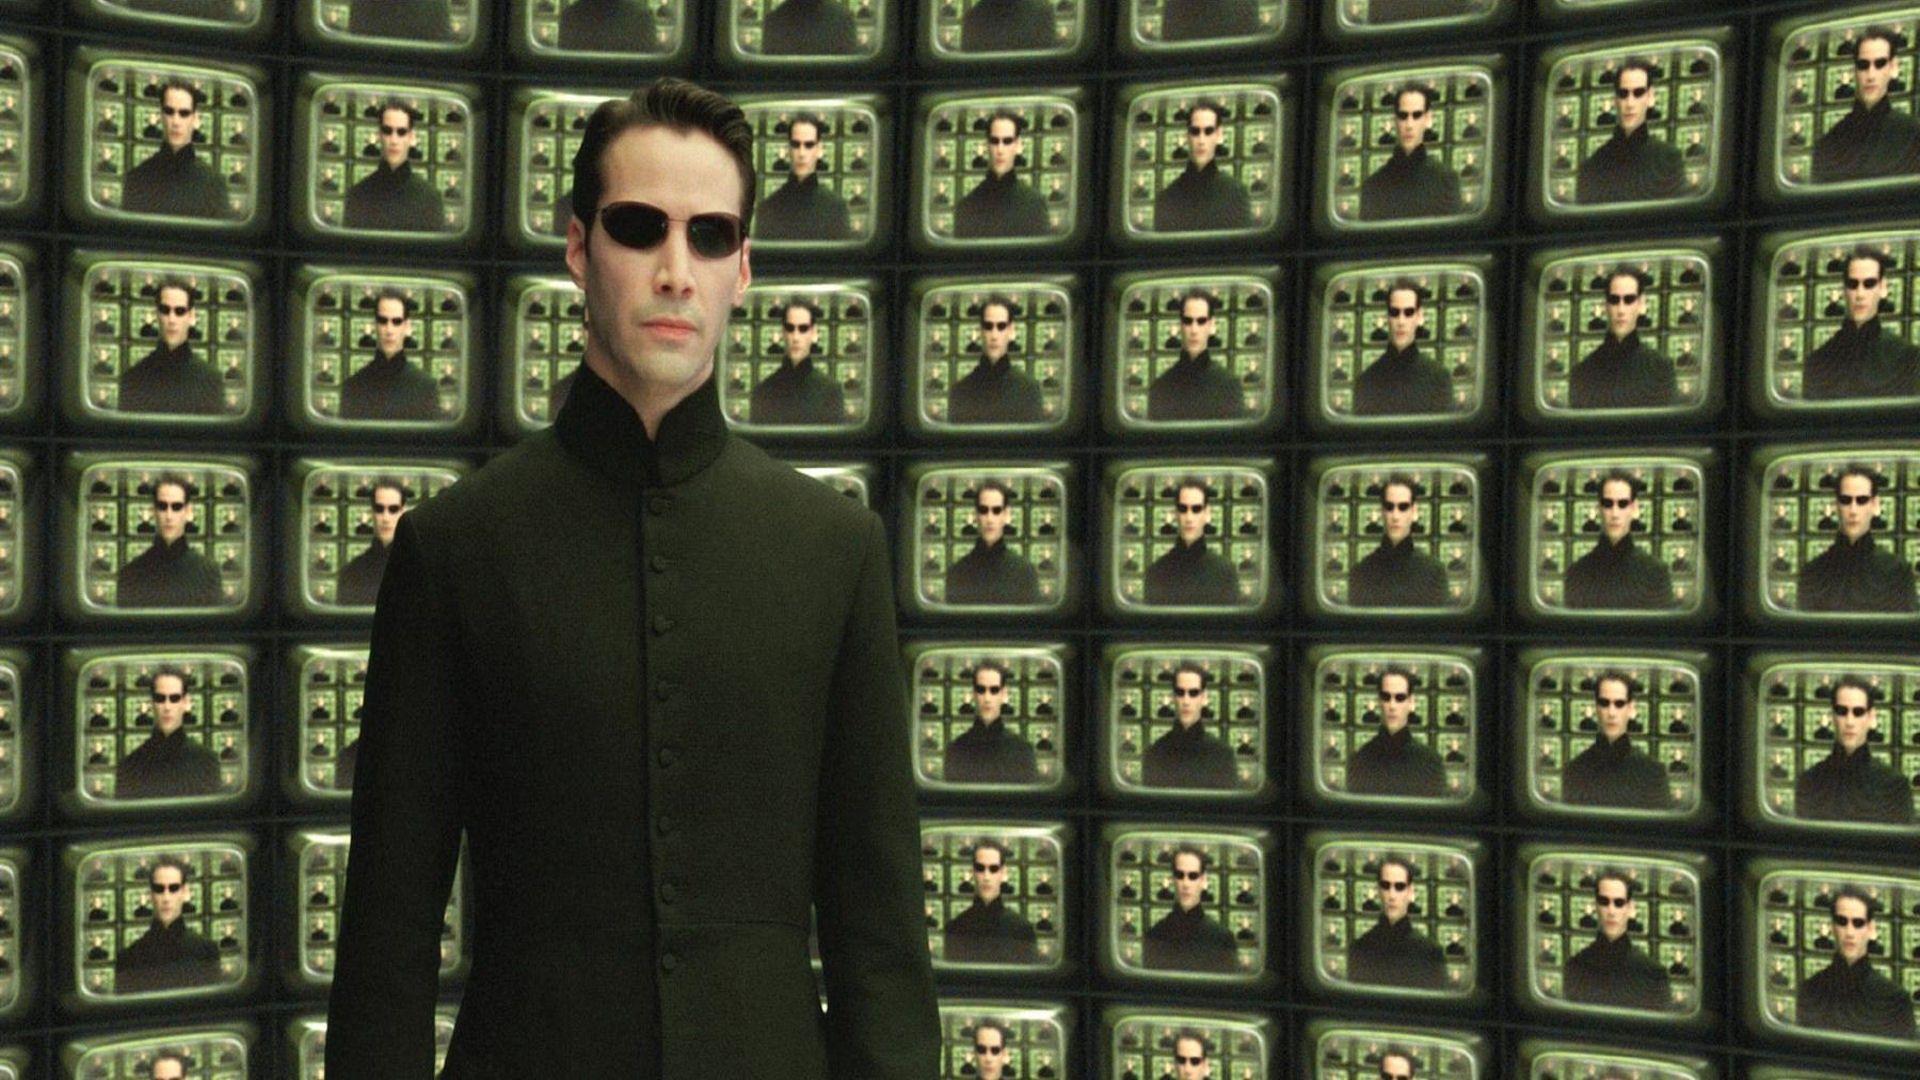 Matrix Wallpaper keanu, matrix, neo, reeves. HD Desktop Wallpaper. The matrix movie, Keanu reeves, Matrix reloaded